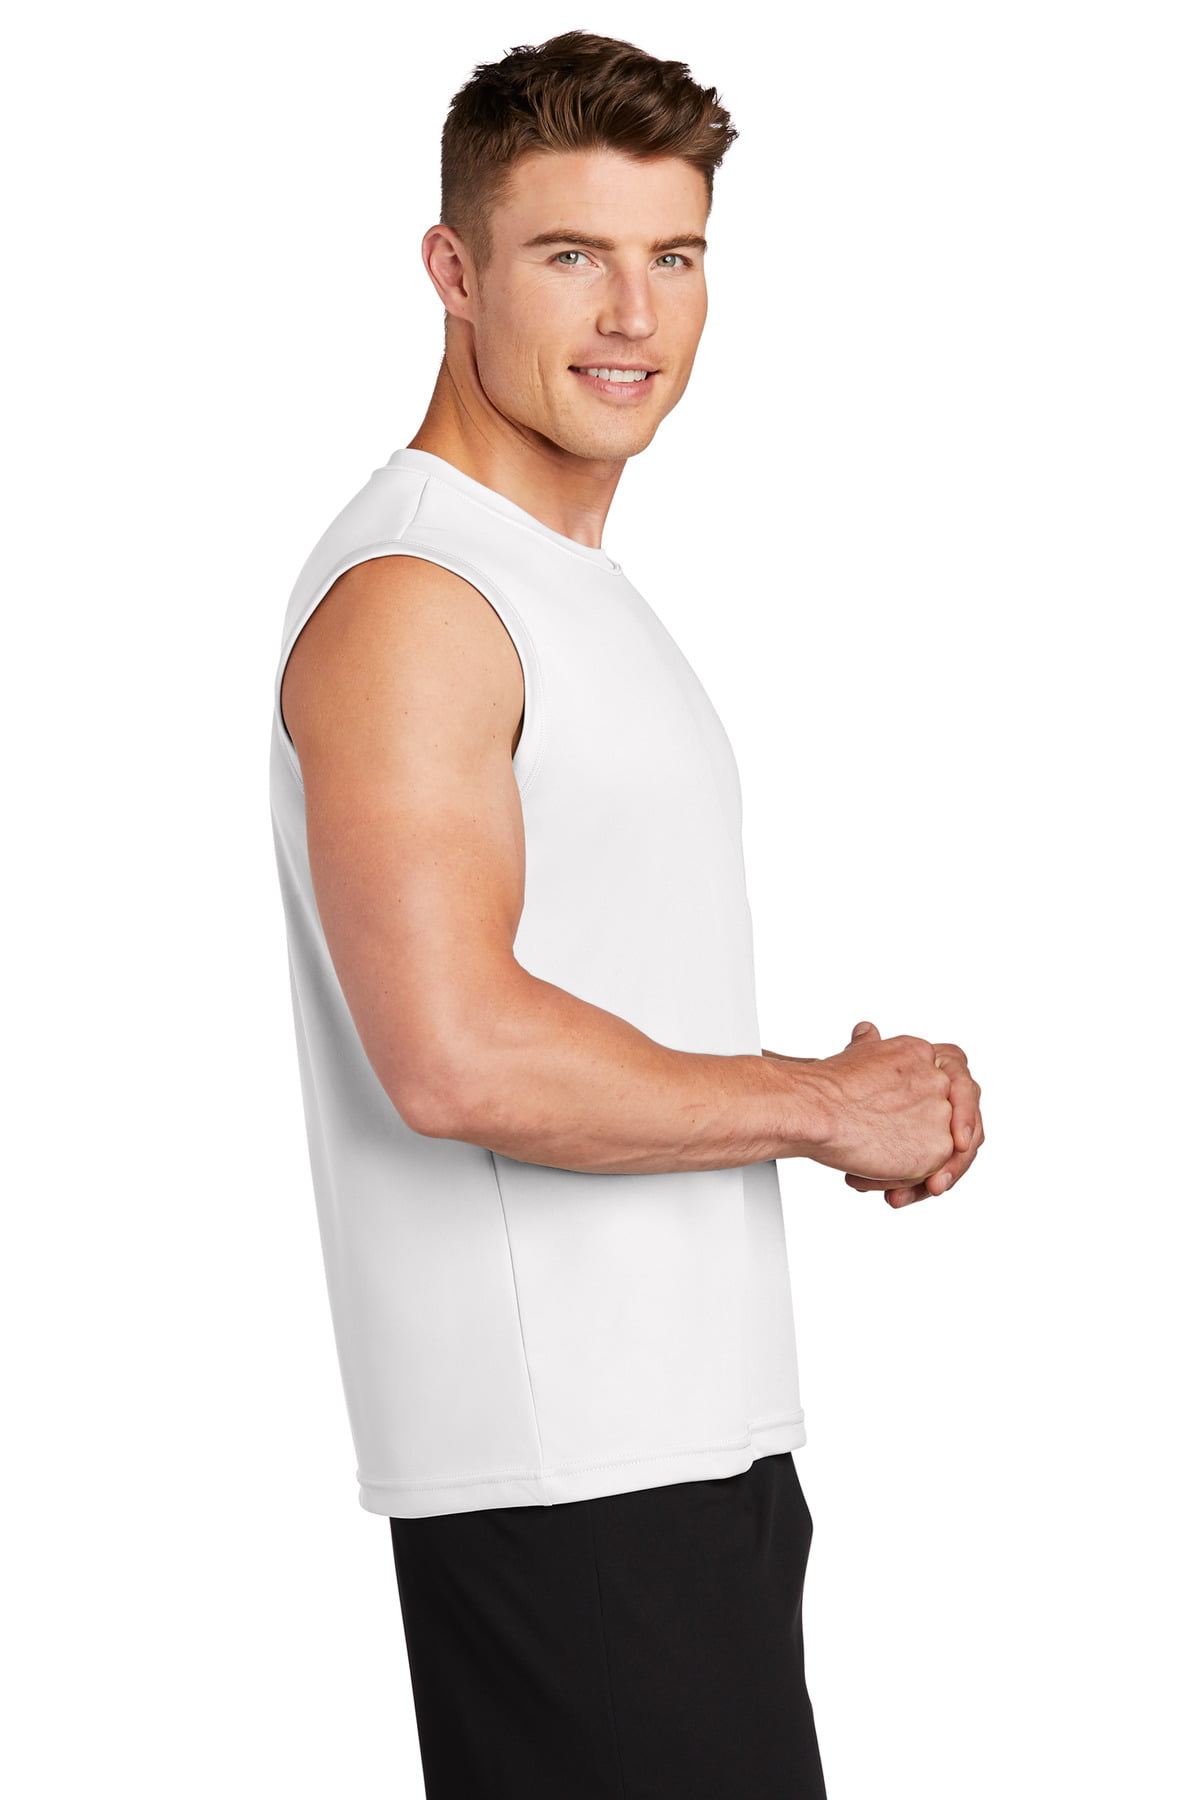 Sport-Tek - PosiCharge Mesh Reversible Tank Top. T550 - Black / White -  Small at  Men's Clothing store: Athletic Tank Top Shirts